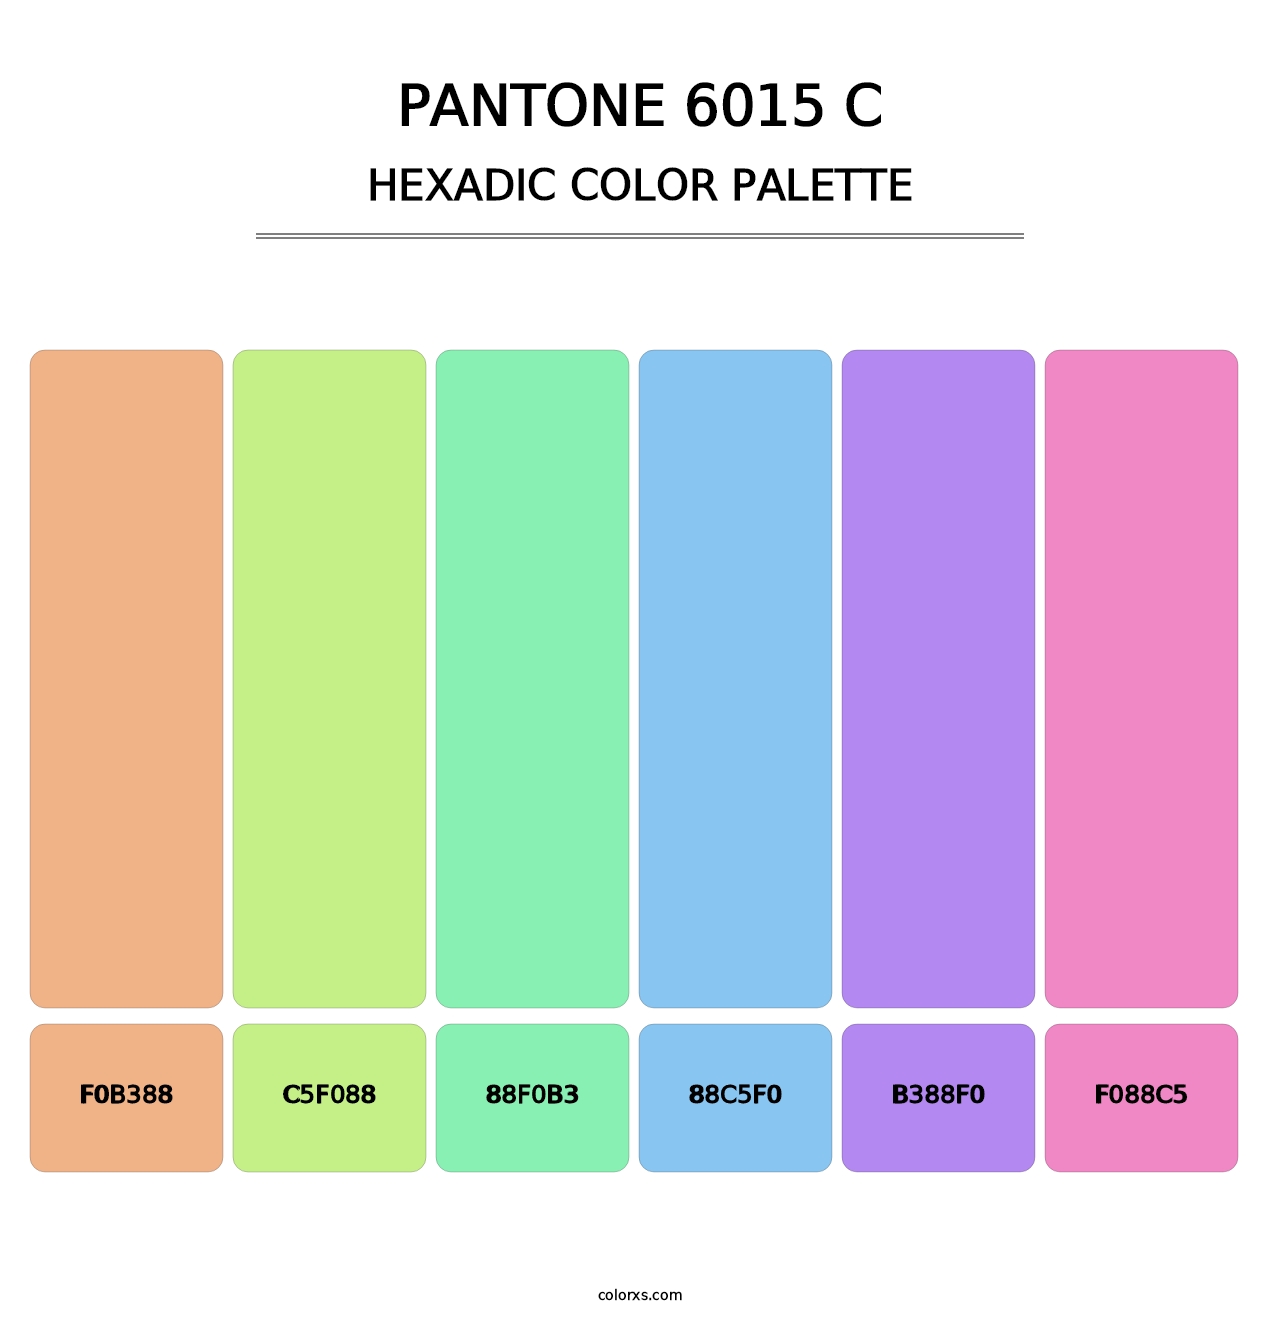 PANTONE 6015 C - Hexadic Color Palette